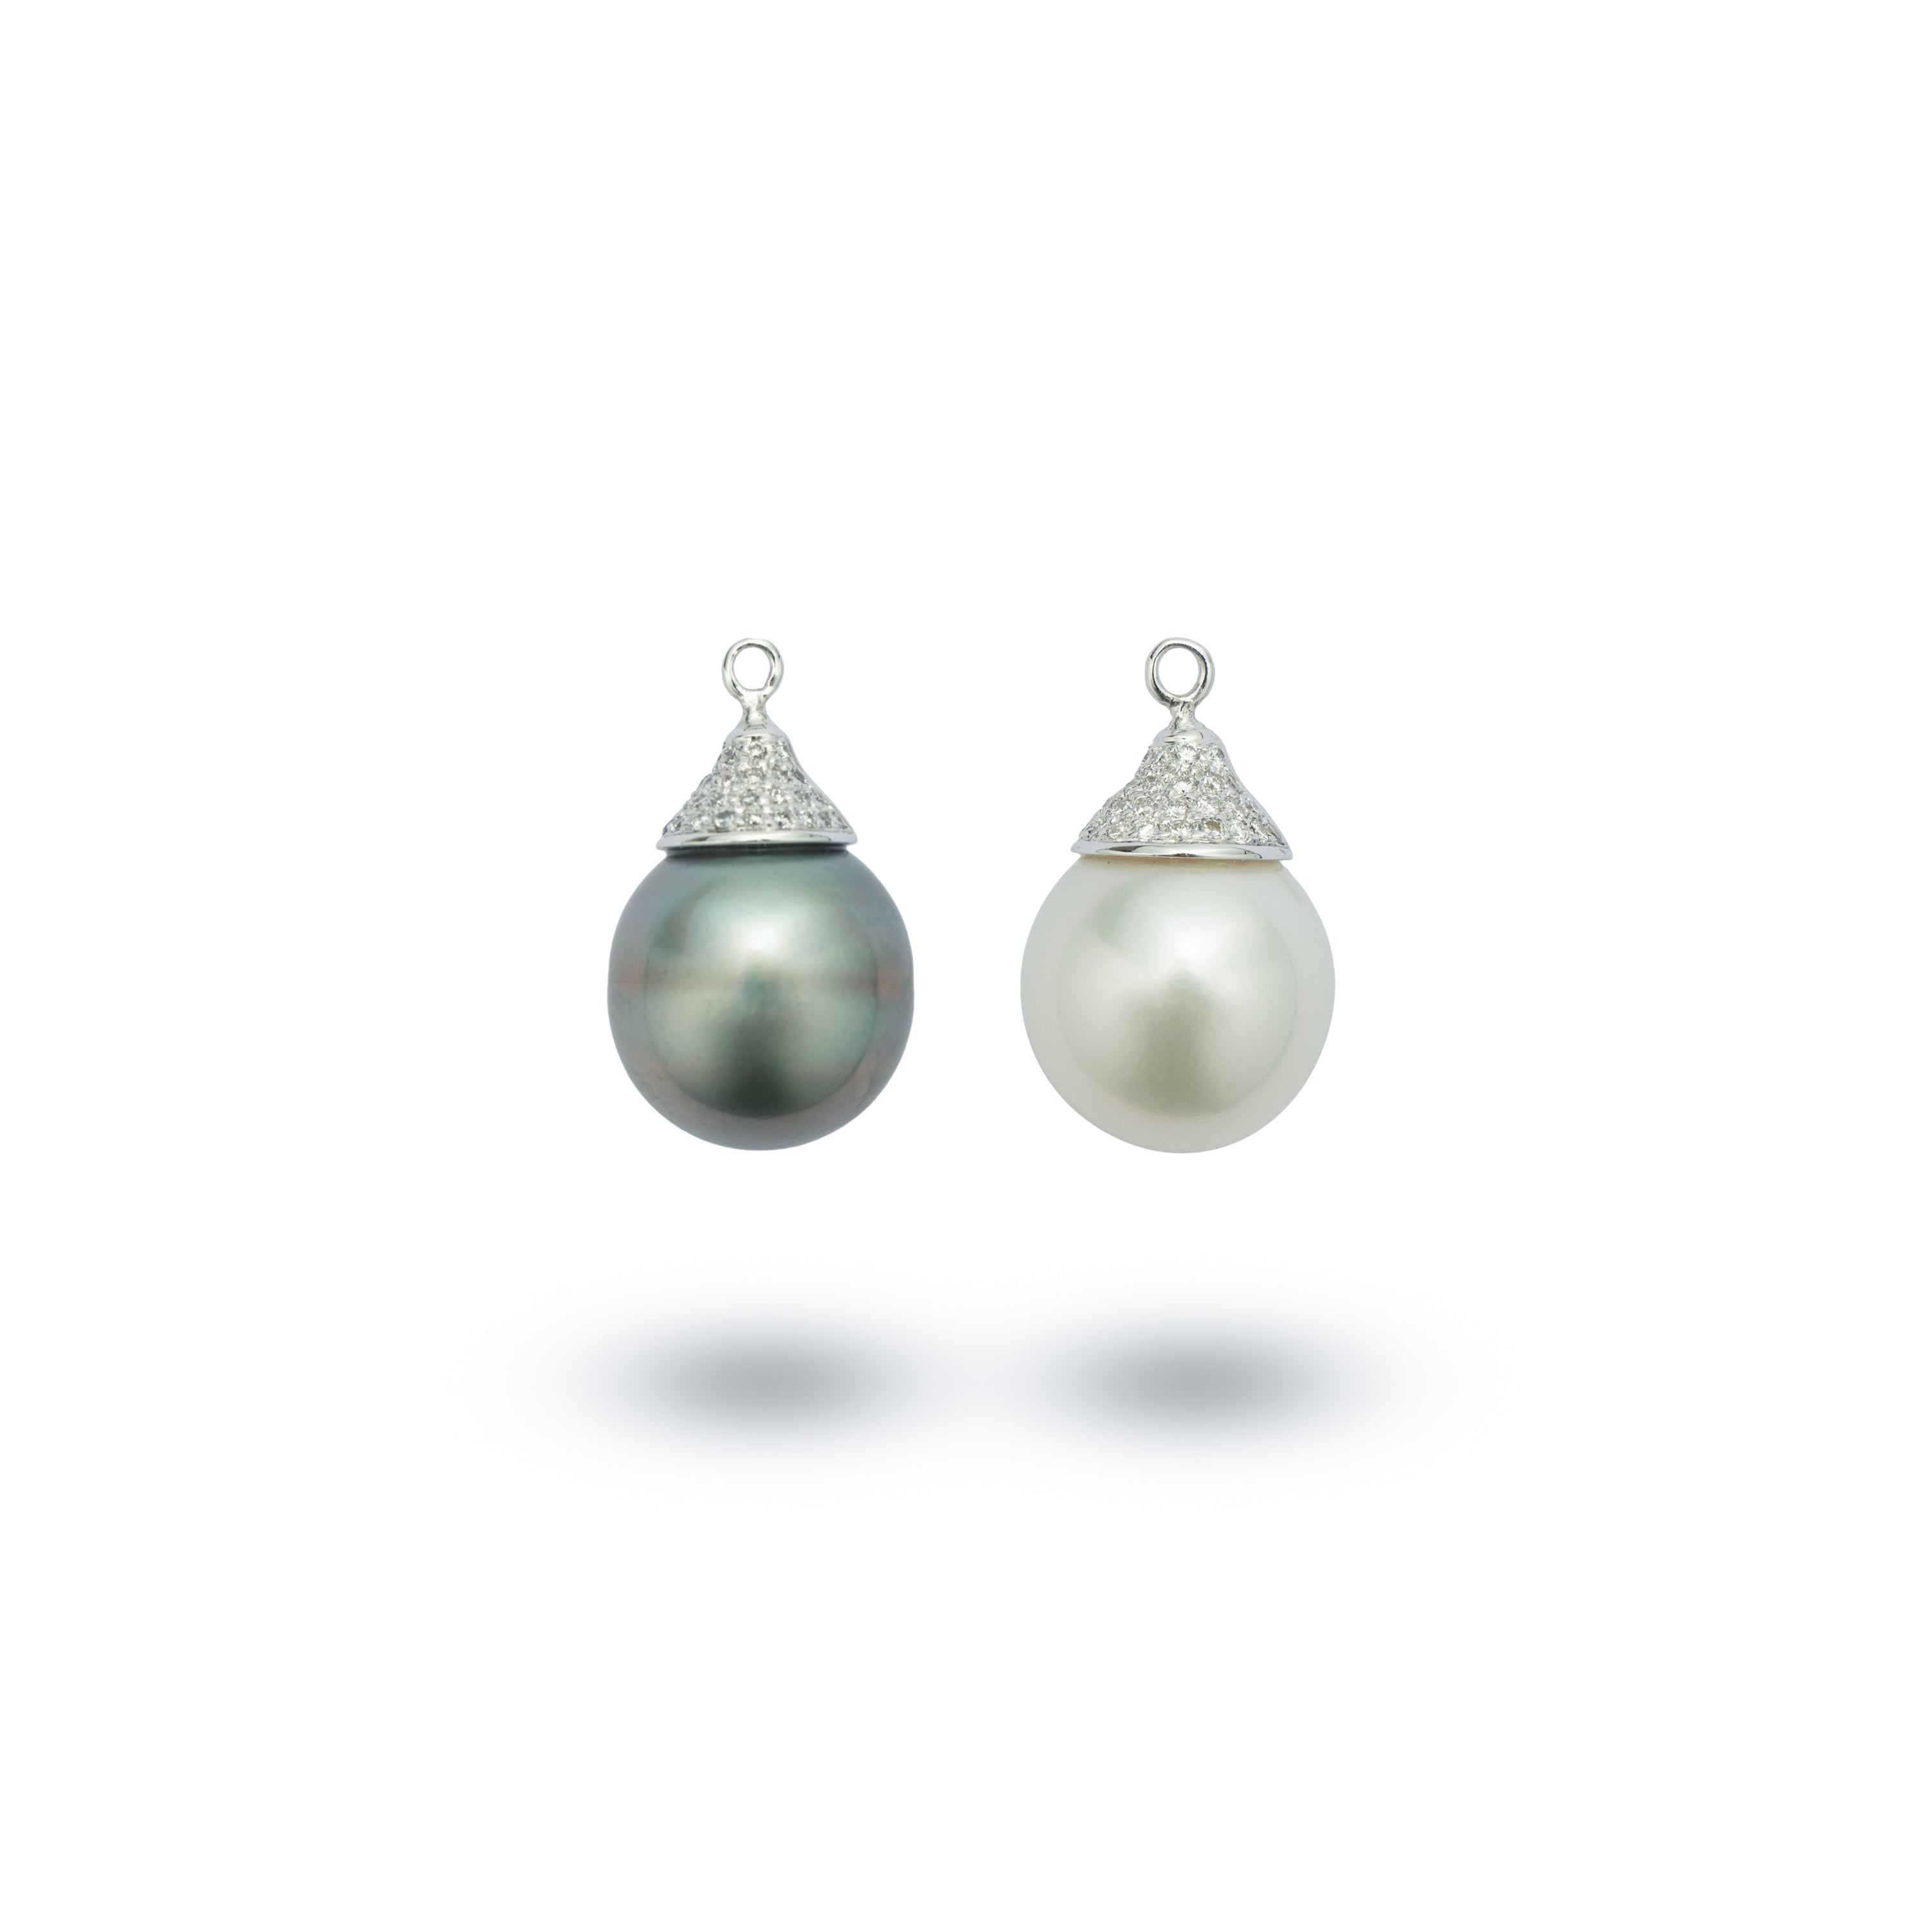 transformational-diamond-south-sea-pearl-earrings-43627912790180.jpg